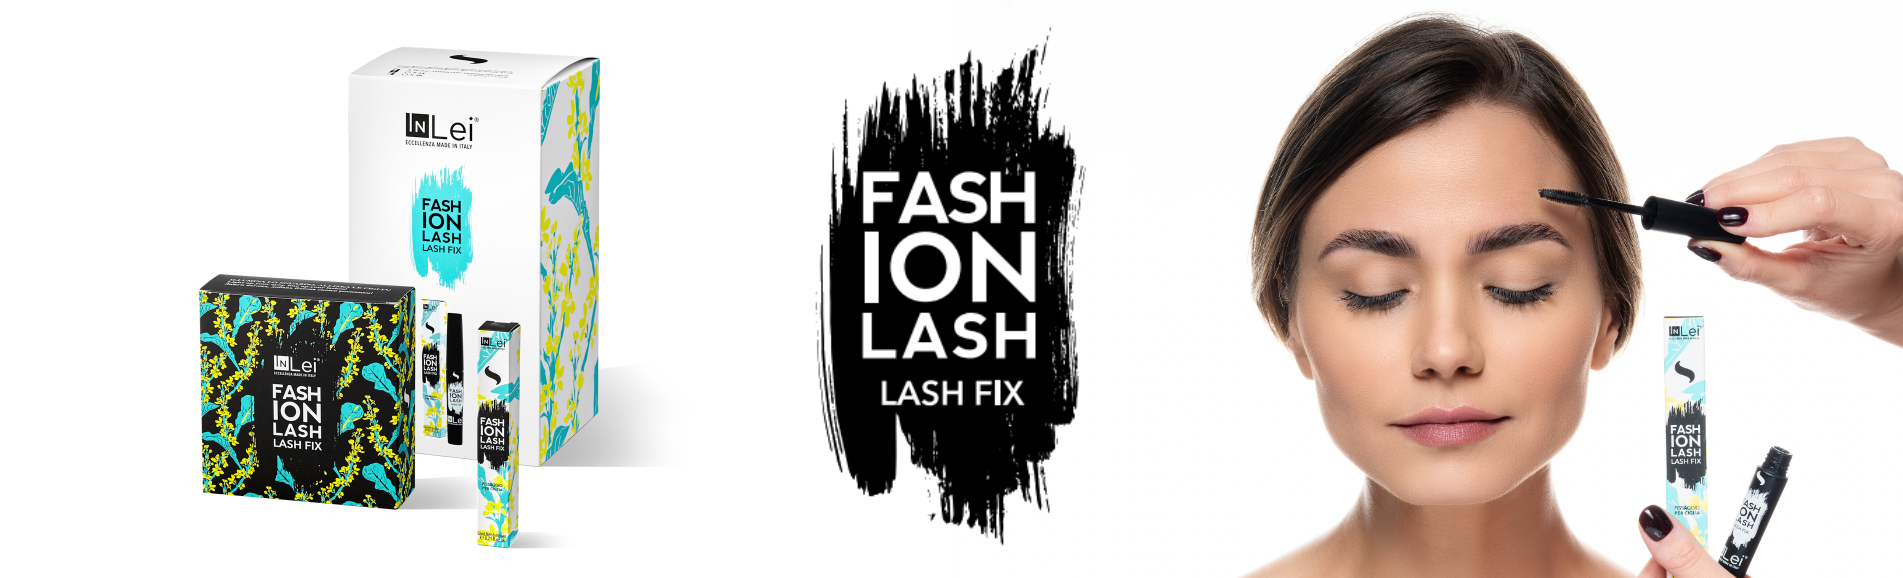 Fashion lash lash fix